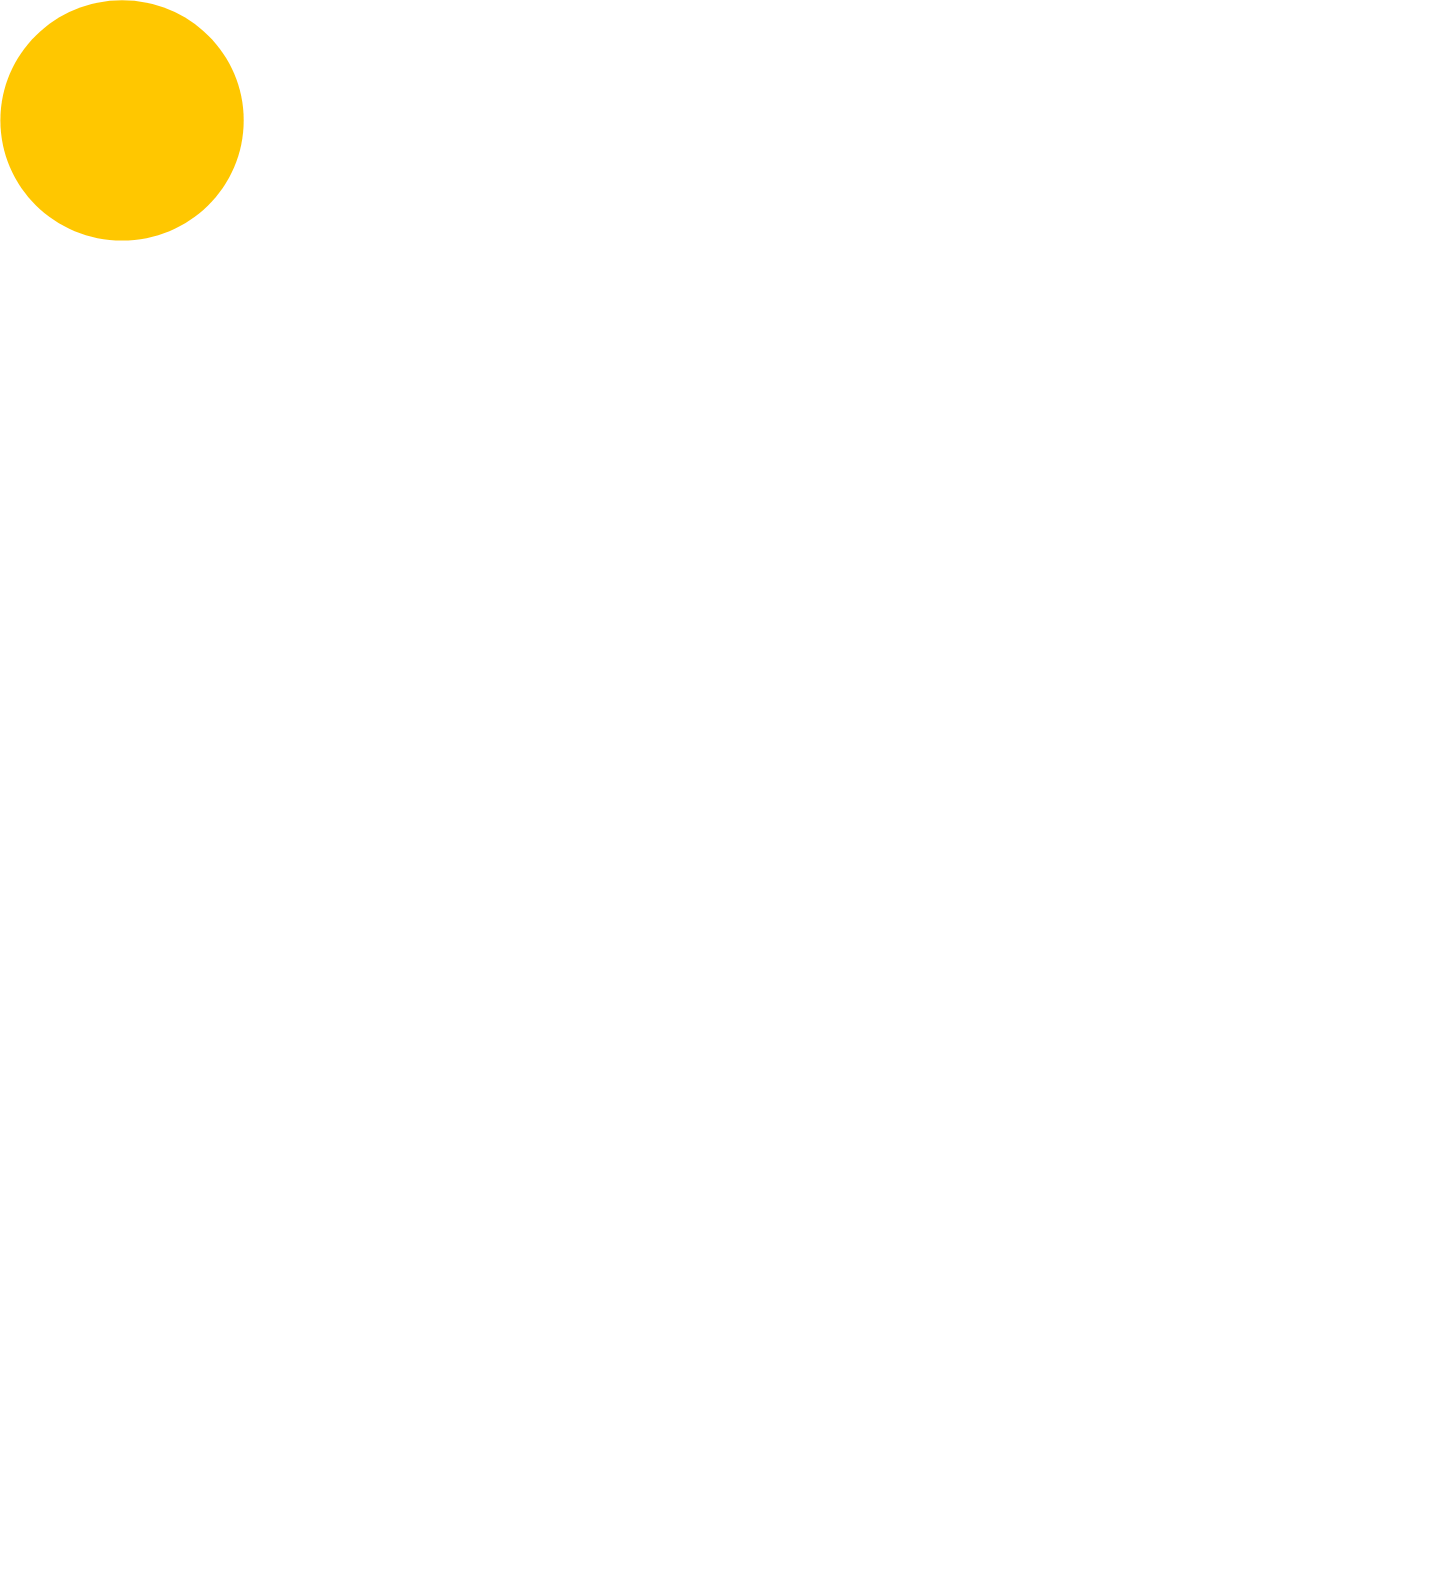 Intertek logo pour fonds sombres (PNG transparent)